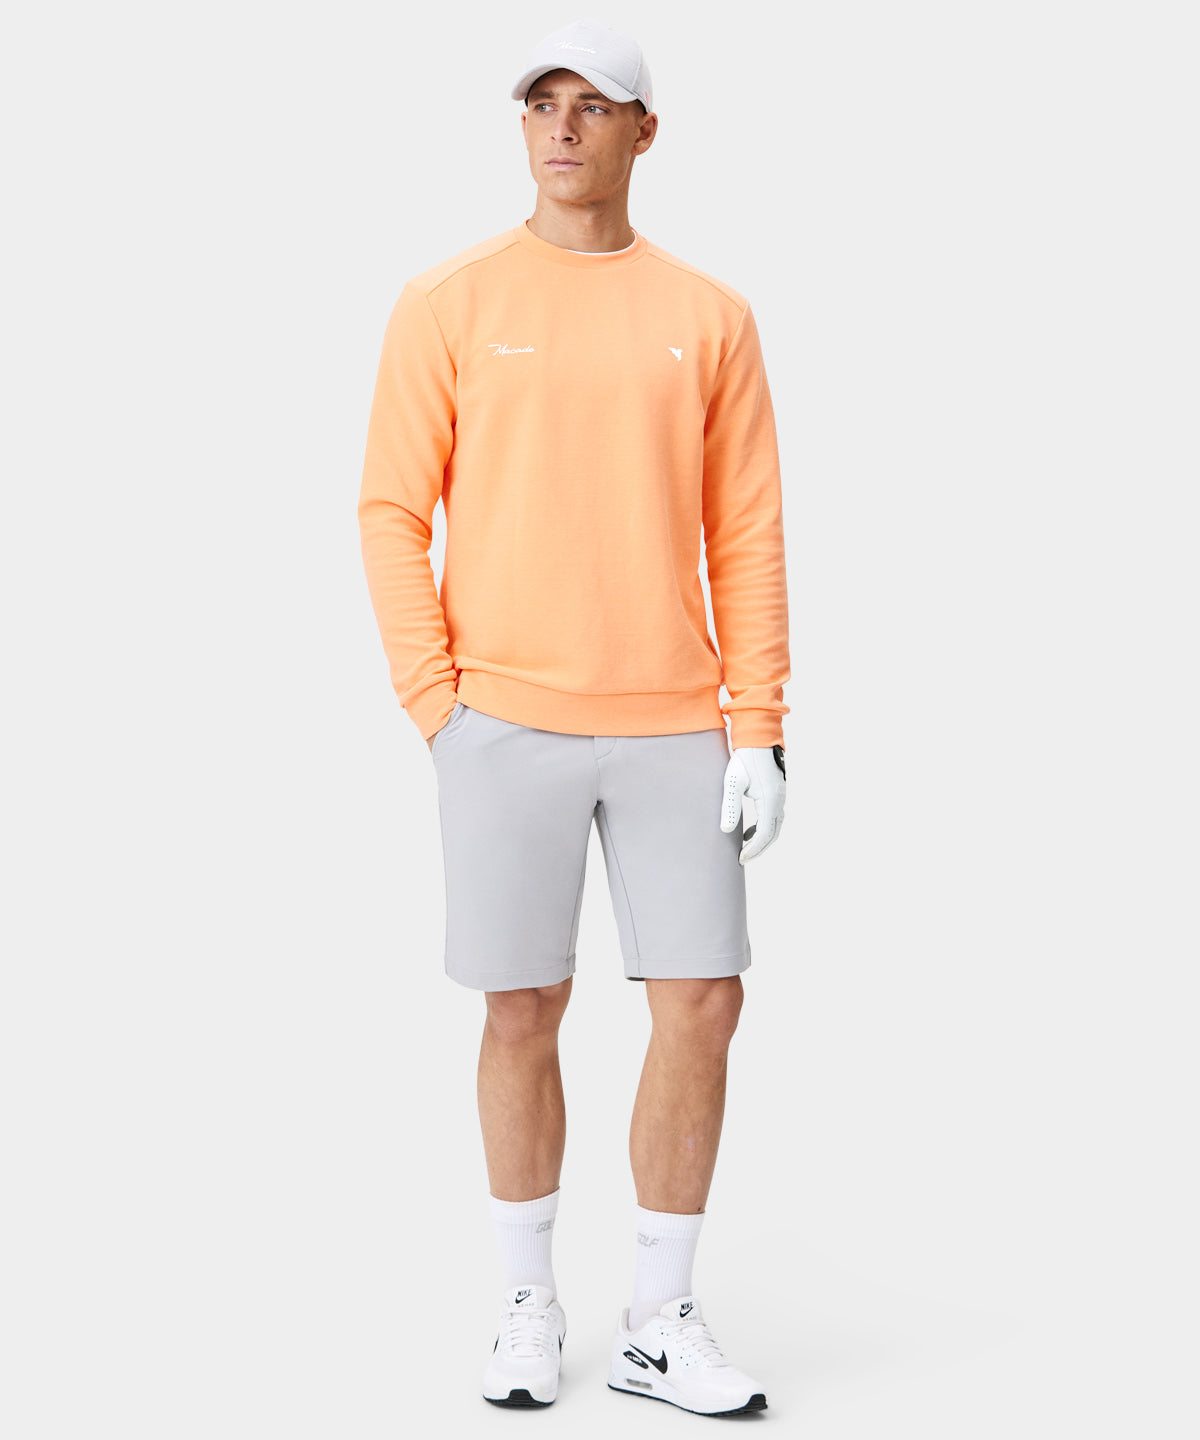 Light Gray Four-Way Stretch Shorts